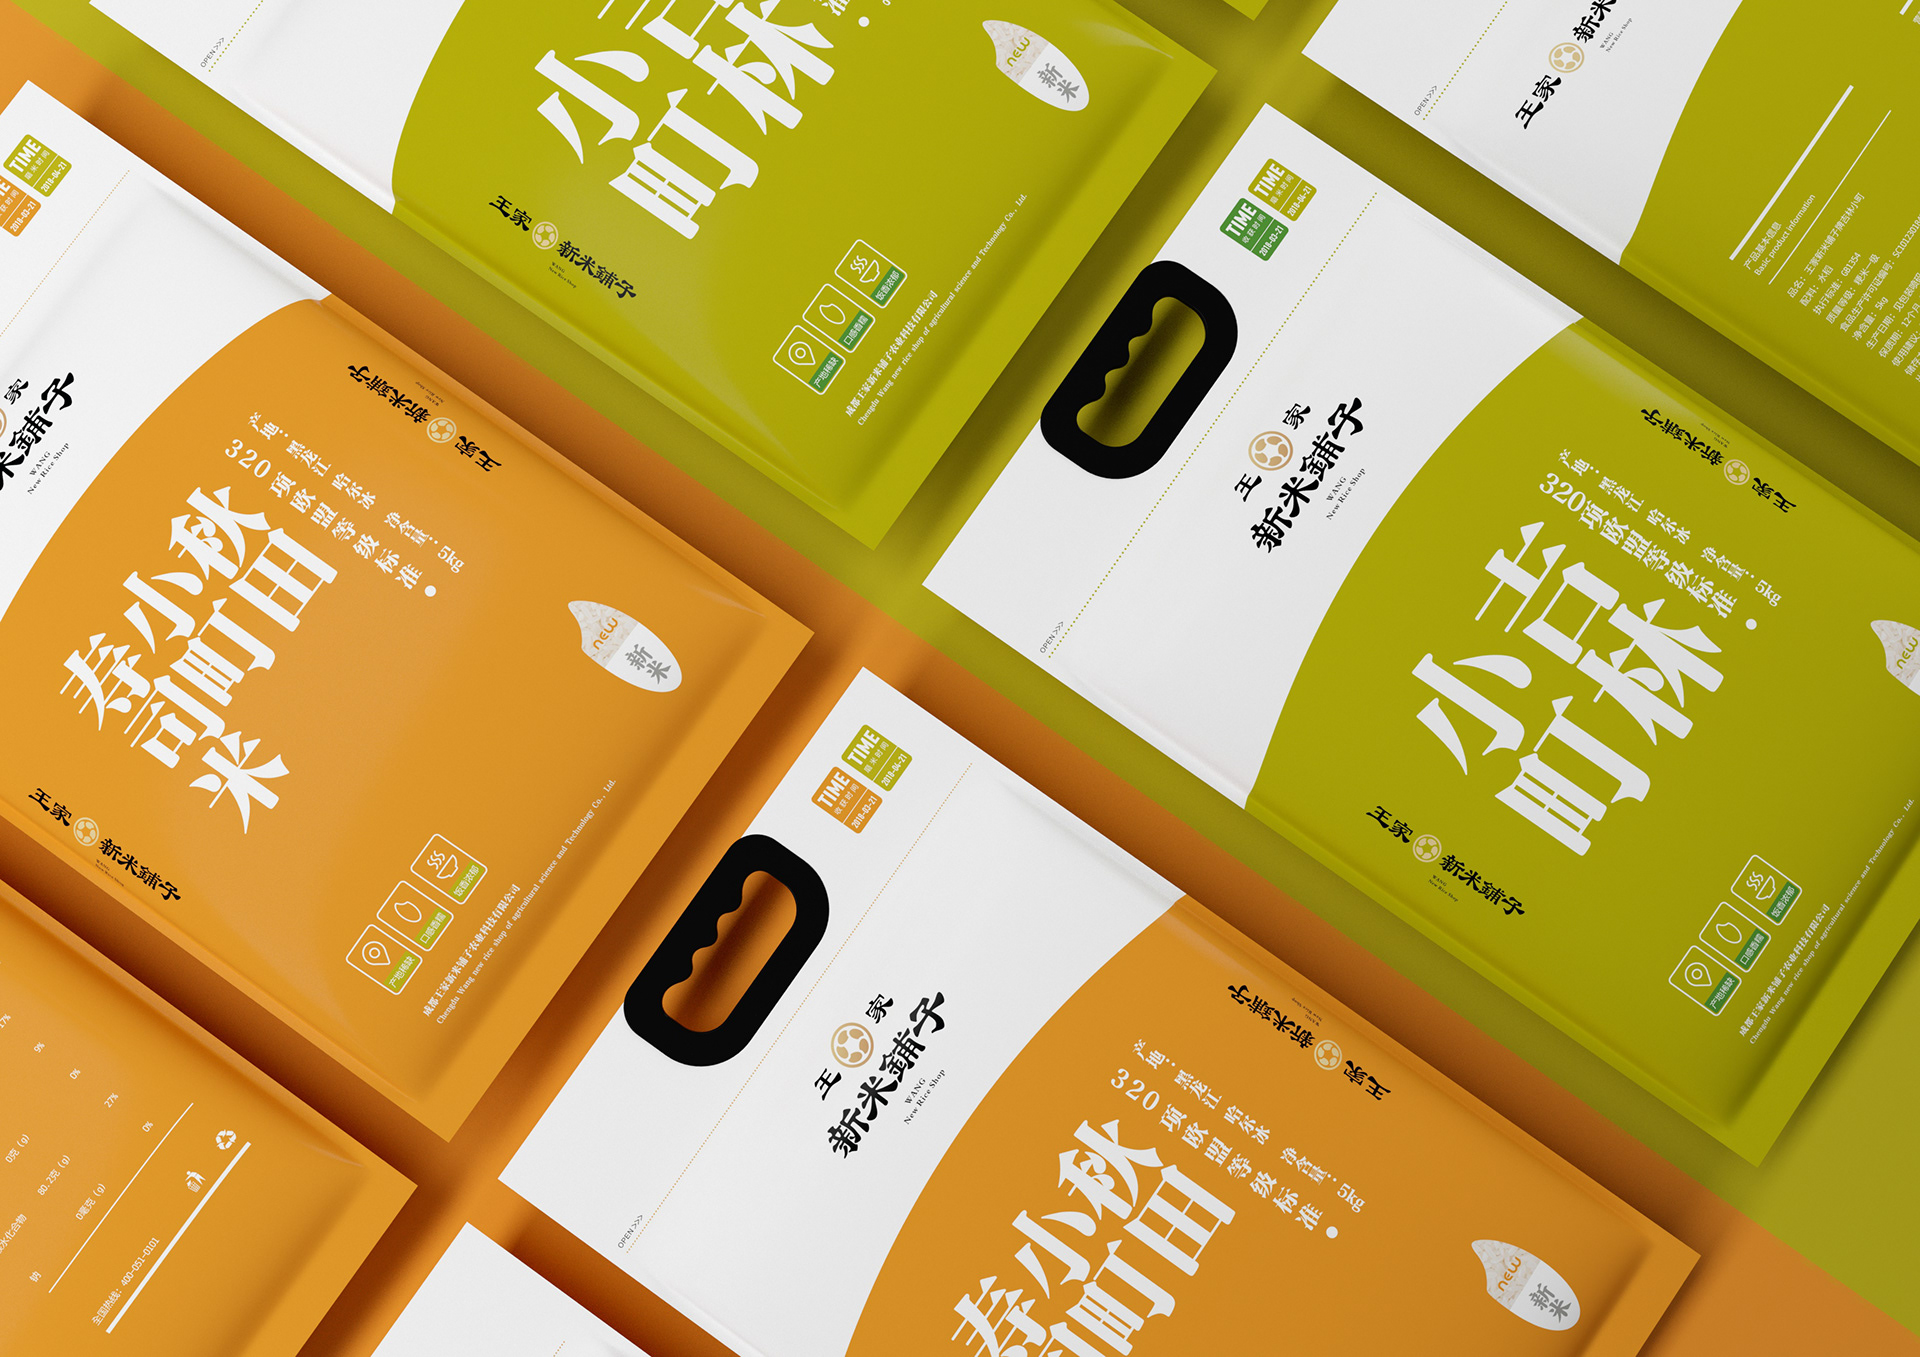 Wangjia new rice shop Brand packaging design王家新米铺子品牌包装设 on Behance